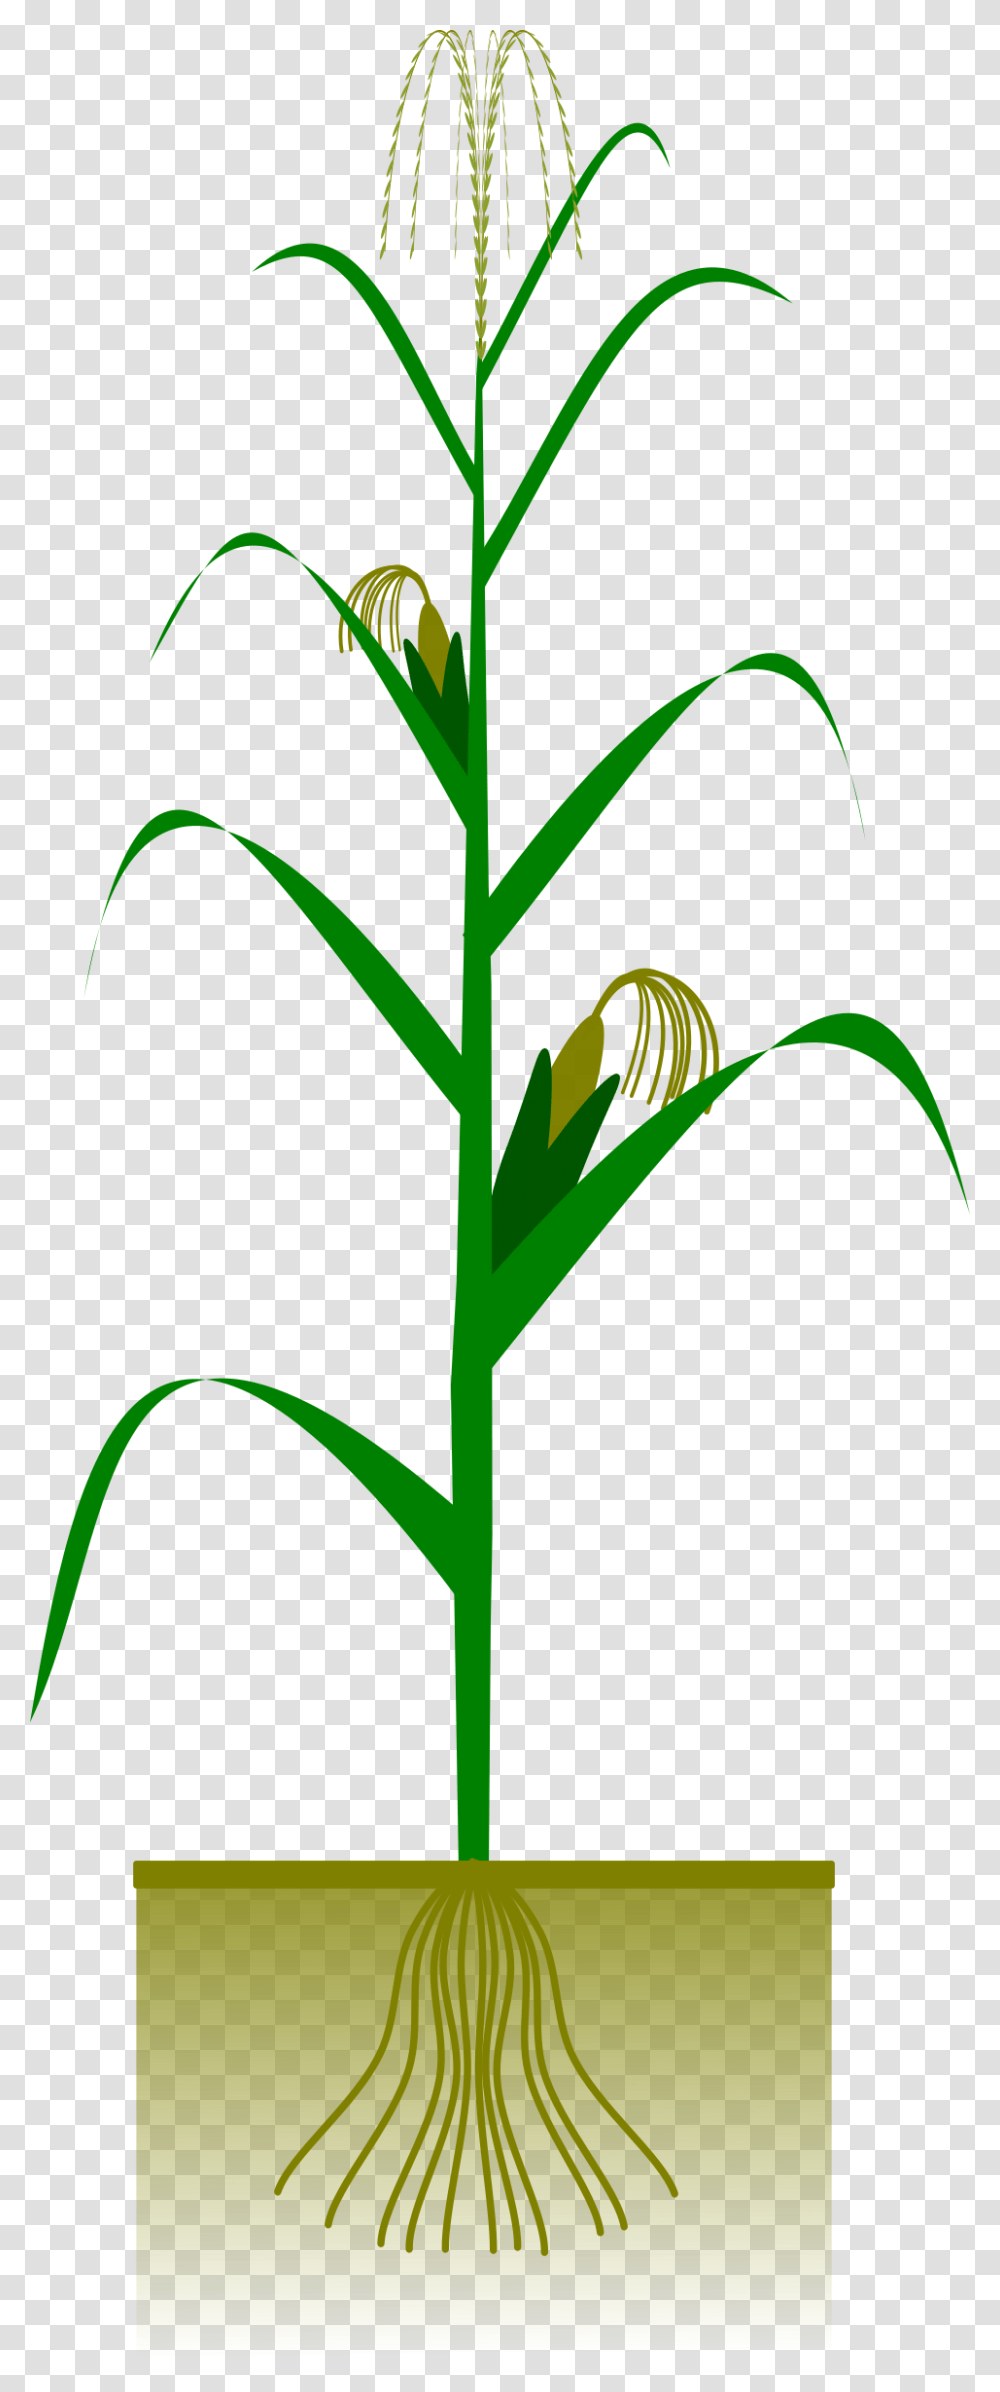 Maize Plant Big Image Corn Plant Vector Free, Vegetable, Food, Flower, Blossom Transparent Png